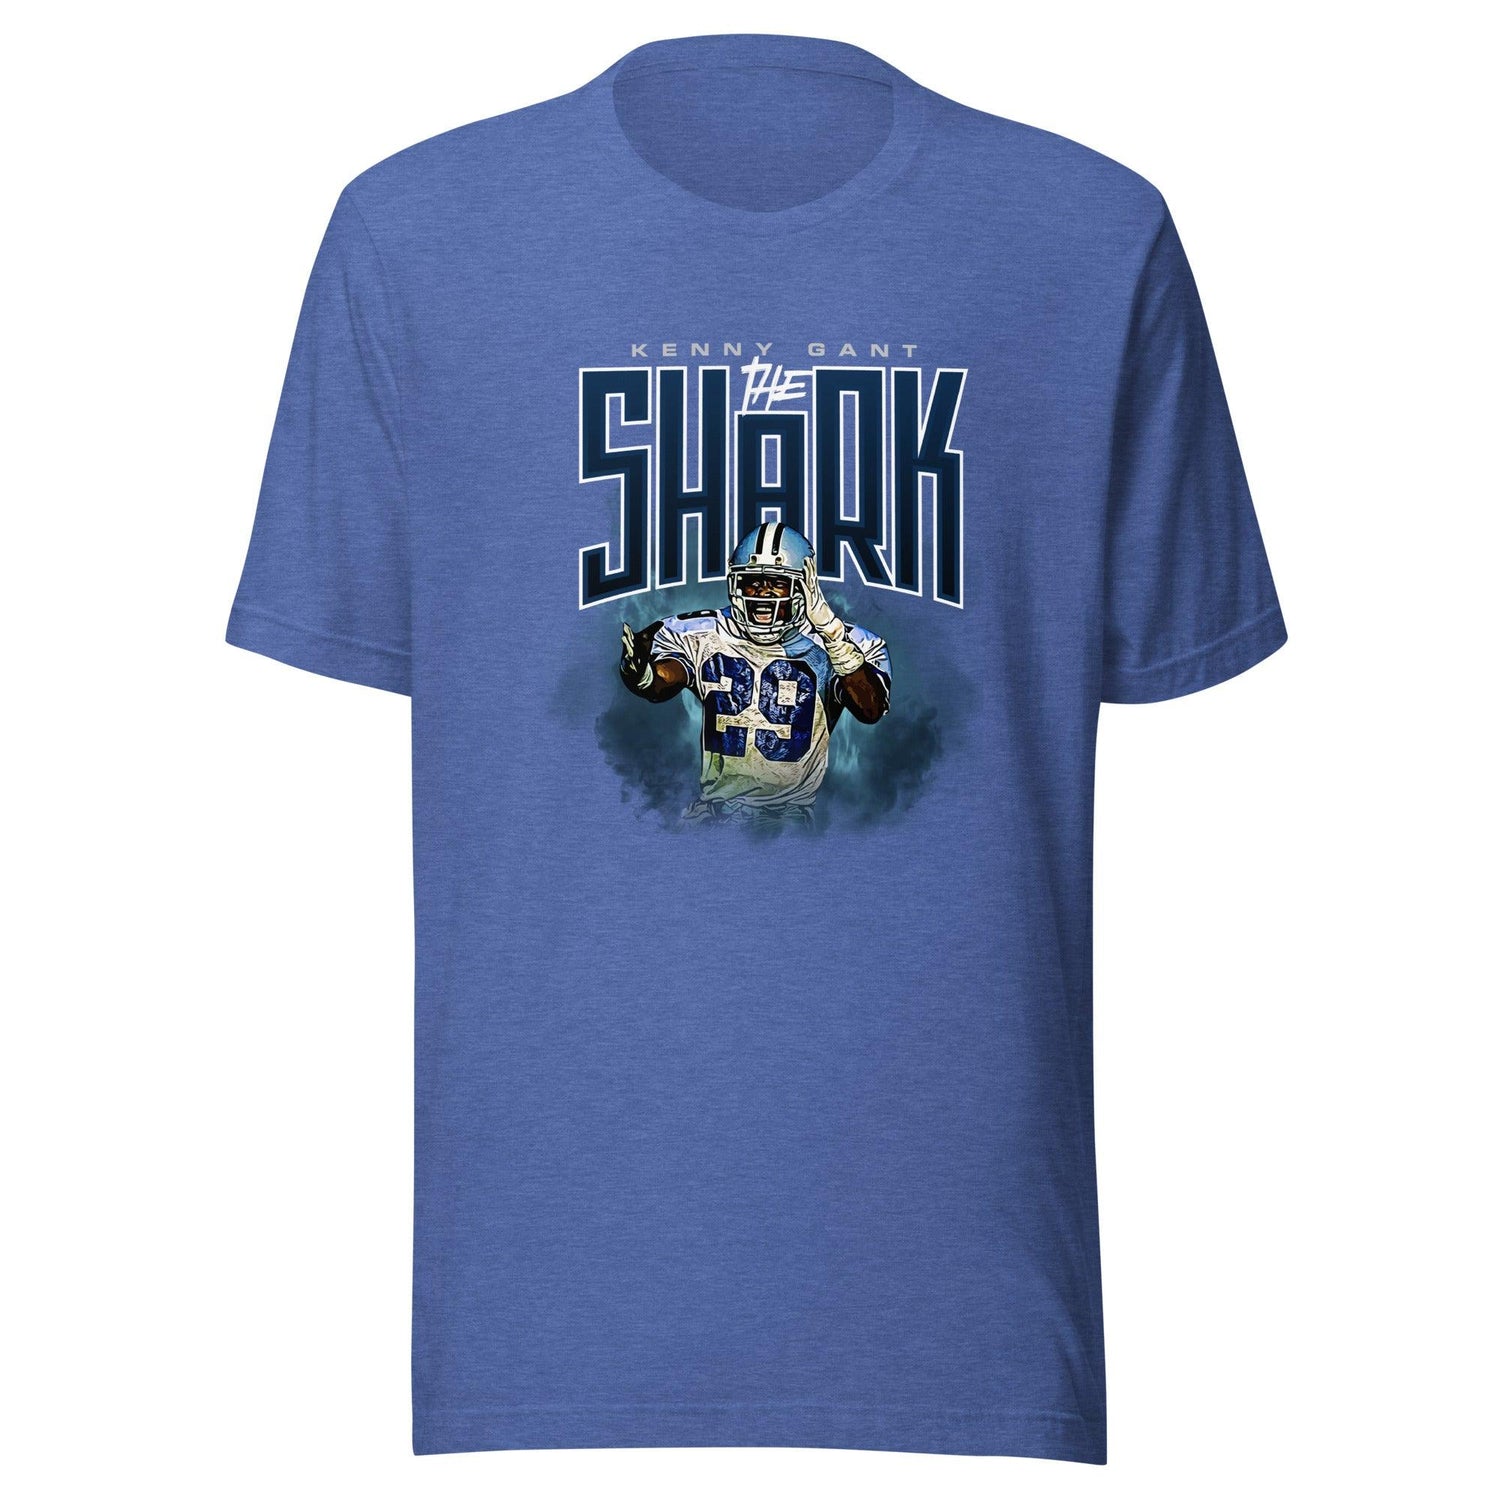 Kenny Gant "The Shark" t-shirt - Fan Arch